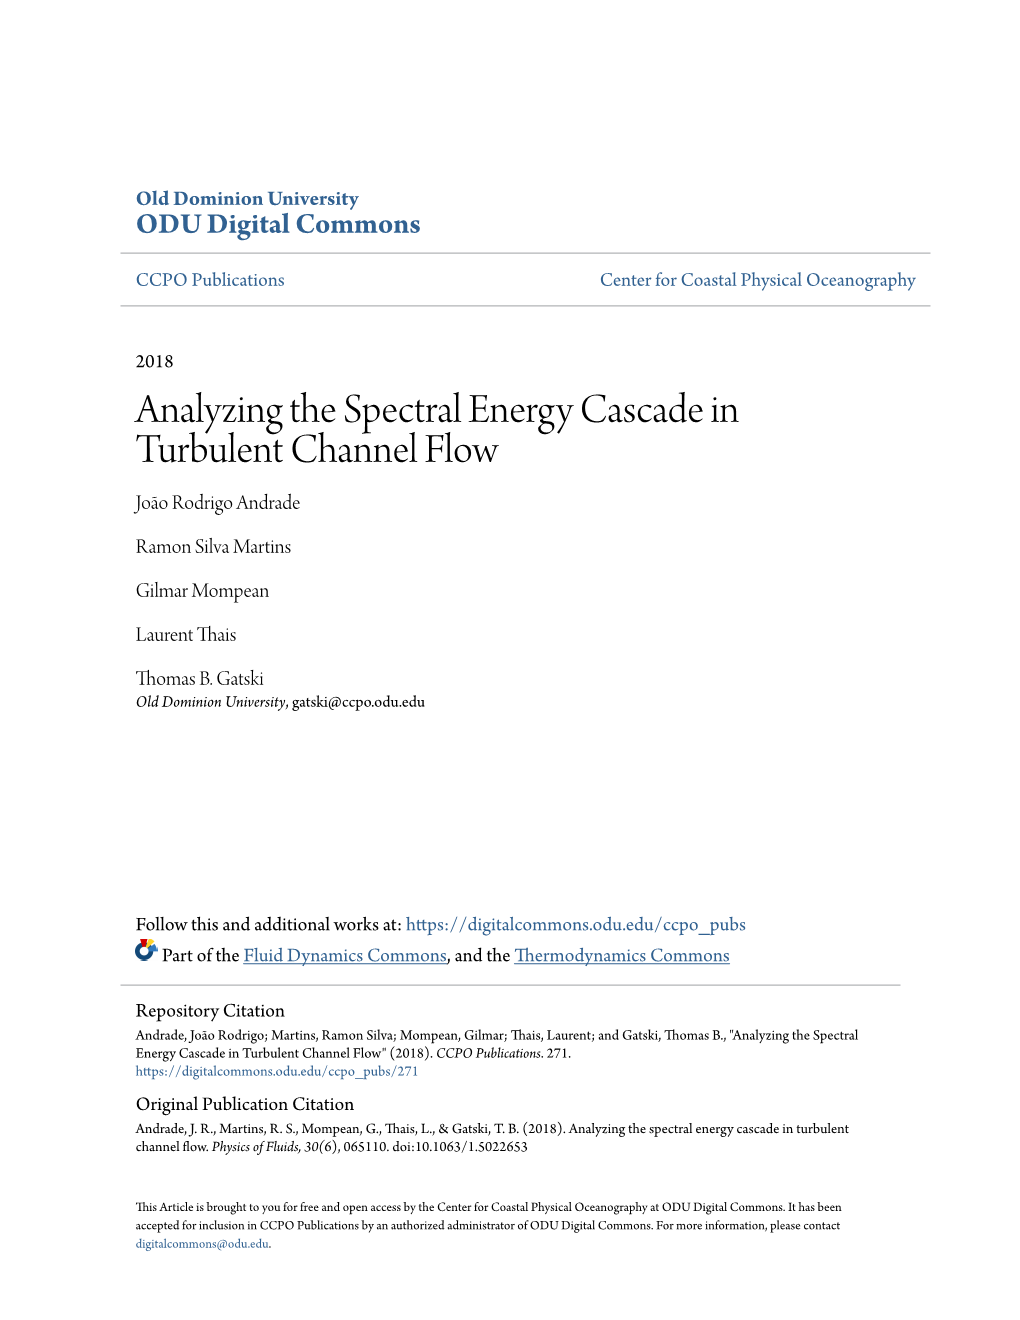 Analyzing the Spectral Energy Cascade in Turbulent Channel Flow João Rodrigo Andrade